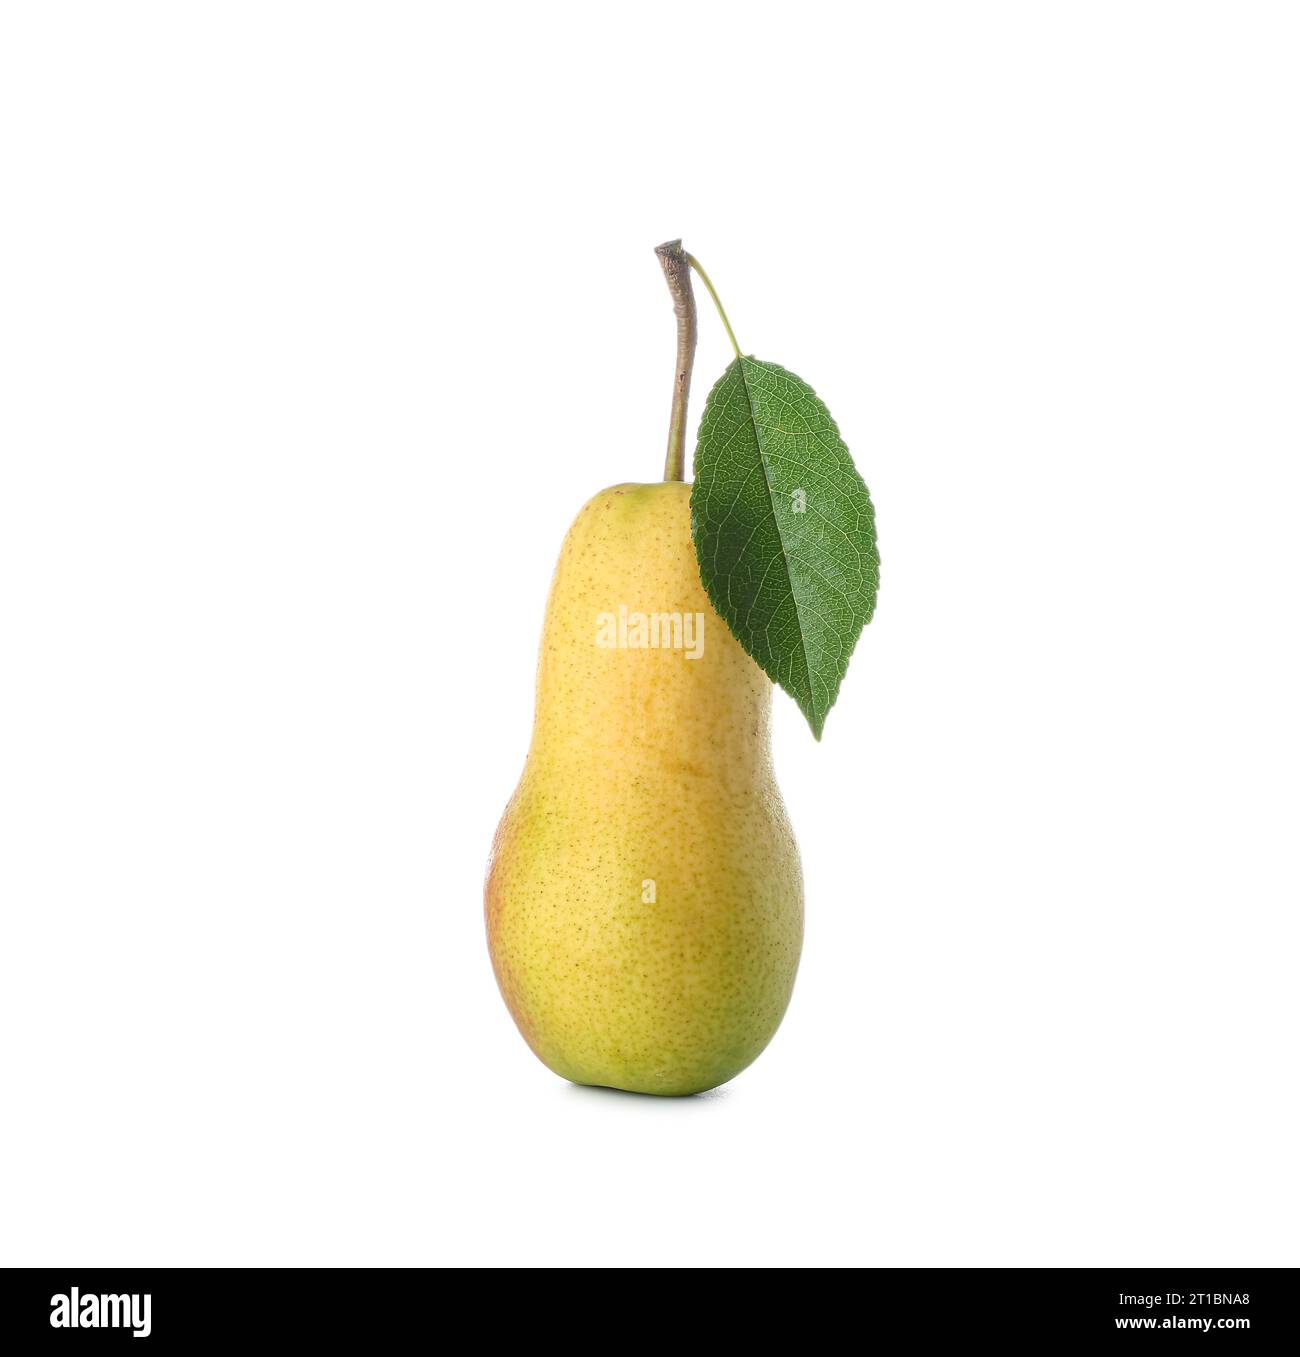 https://c8.alamy.com/comp/2T1BNA8/ripe-pear-isolated-on-white-background-2T1BNA8.jpg